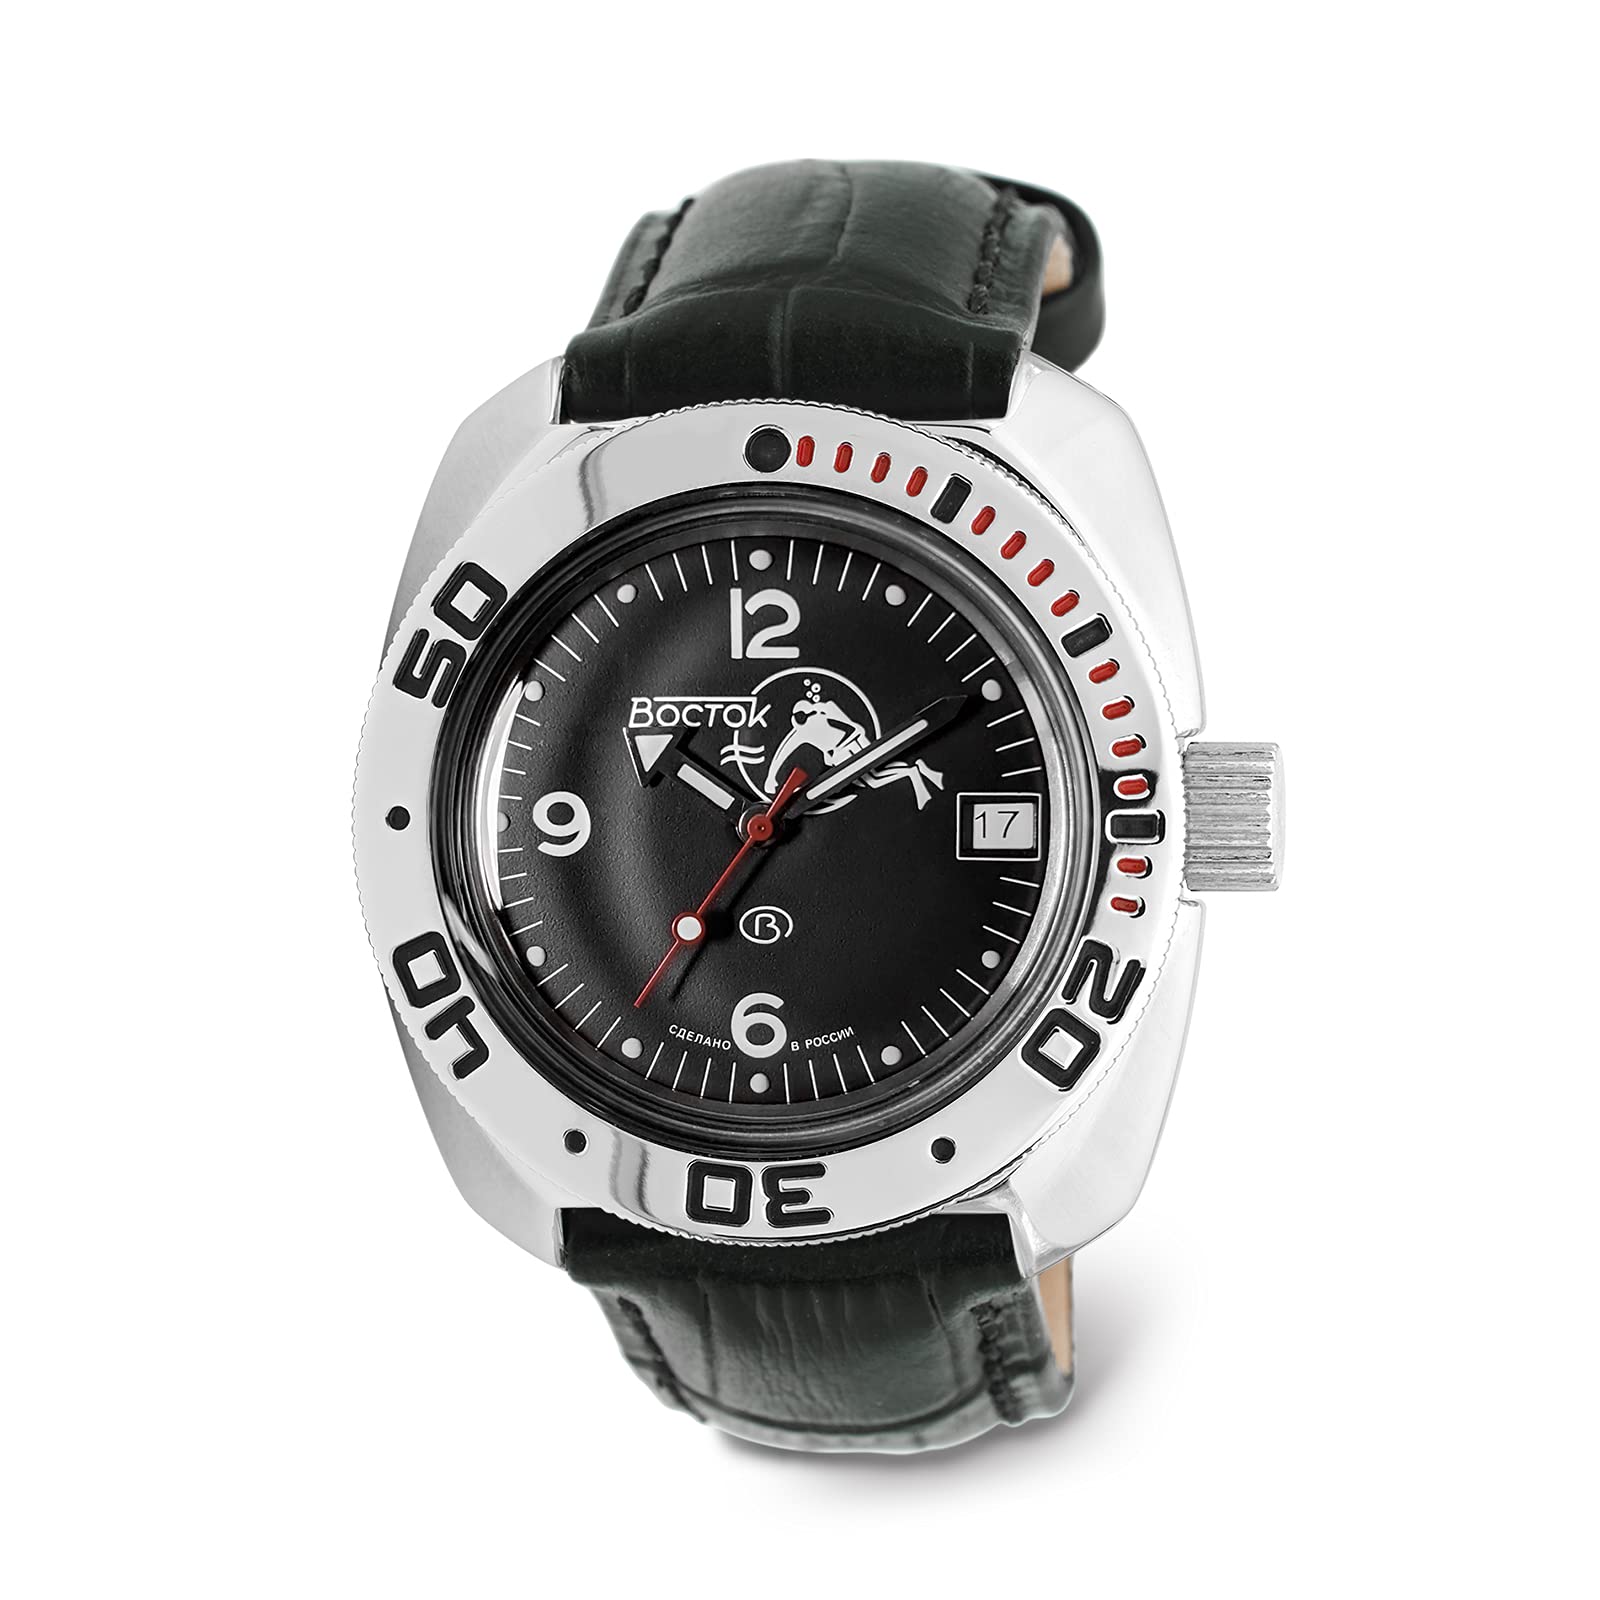 VOSTOK | Scuba Dude Amphibian Automatic Self-Winding Russian Diver Wrist Watch | WR 200 m | Amphibia 710634 |Fashion | Business | Casual Men's Watches